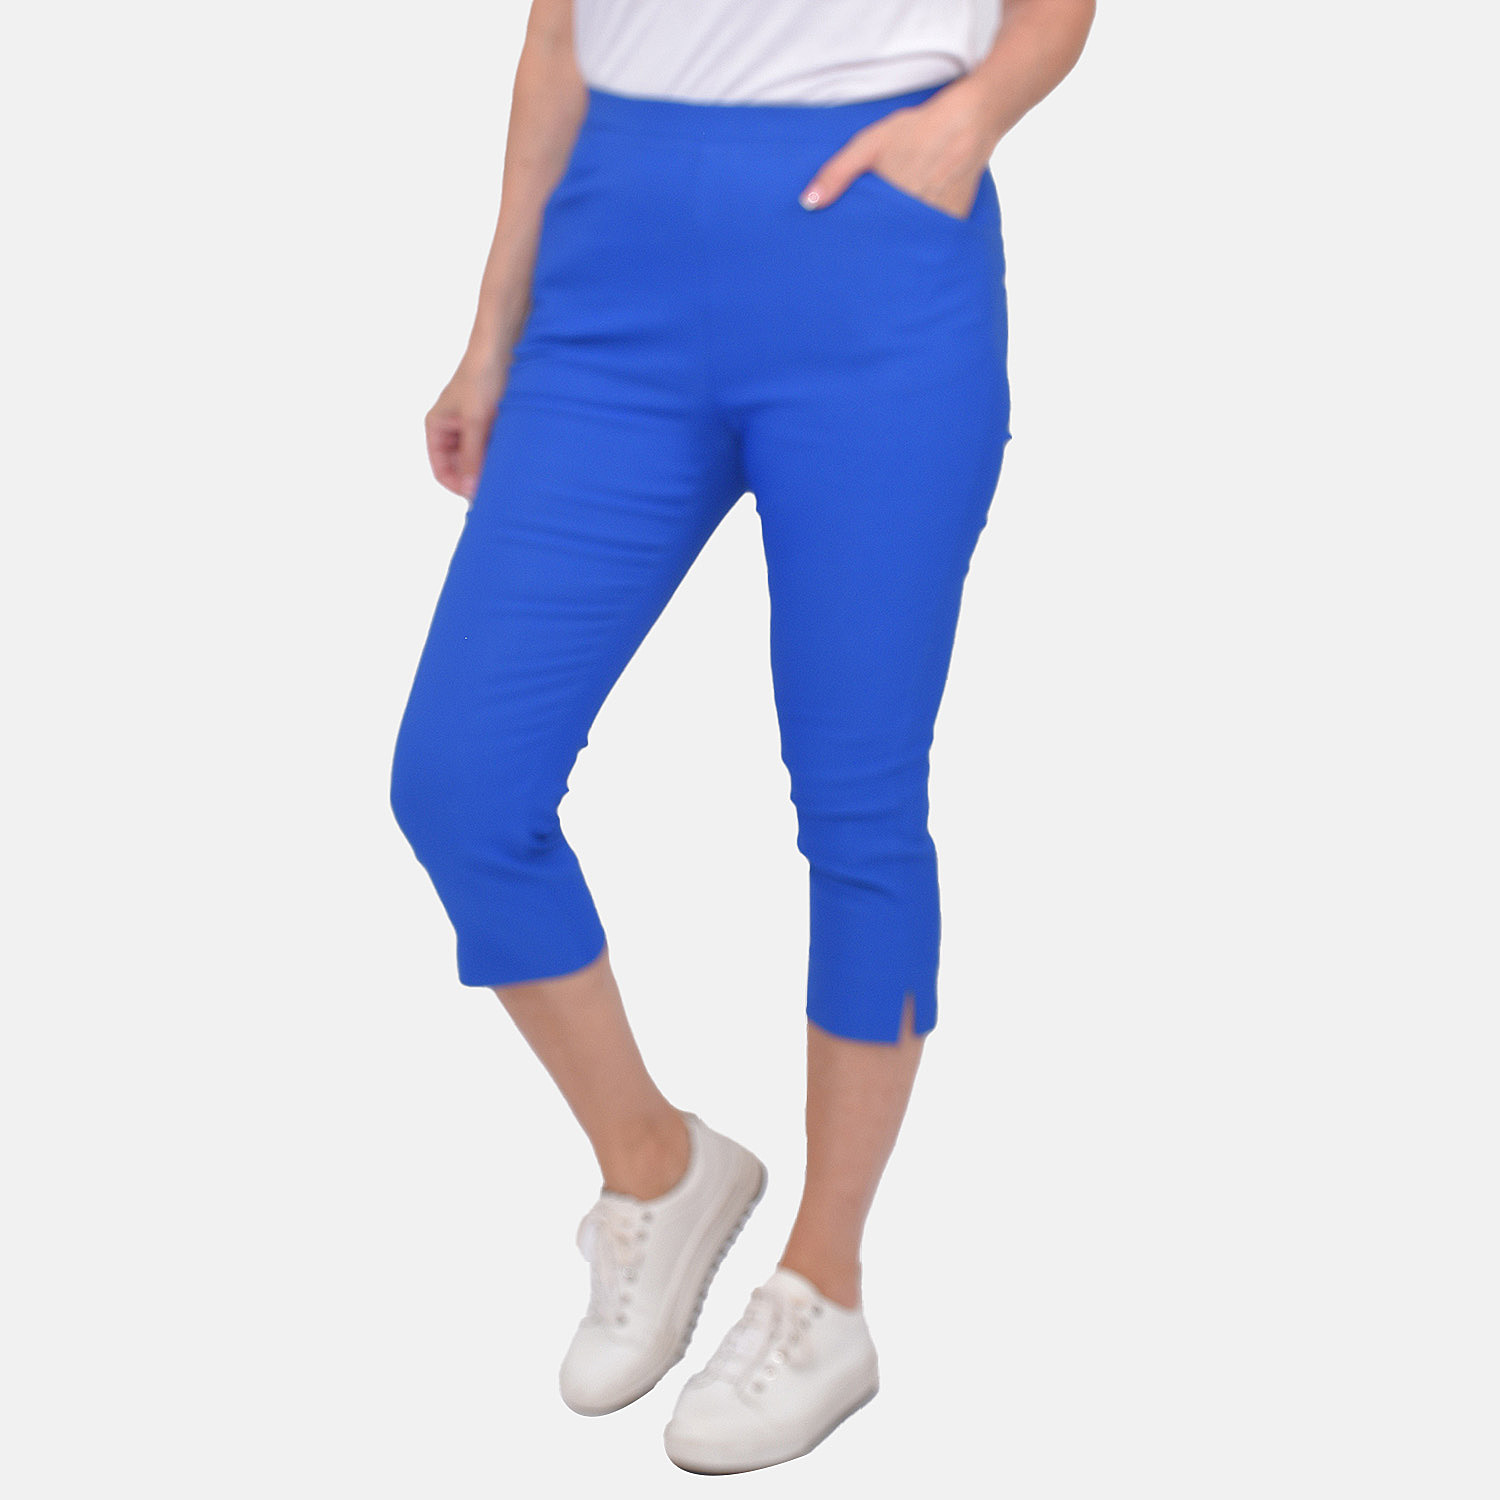 Viscose-Jean-and-Pant-Trouser-Size-1x1-cm-Cobalt